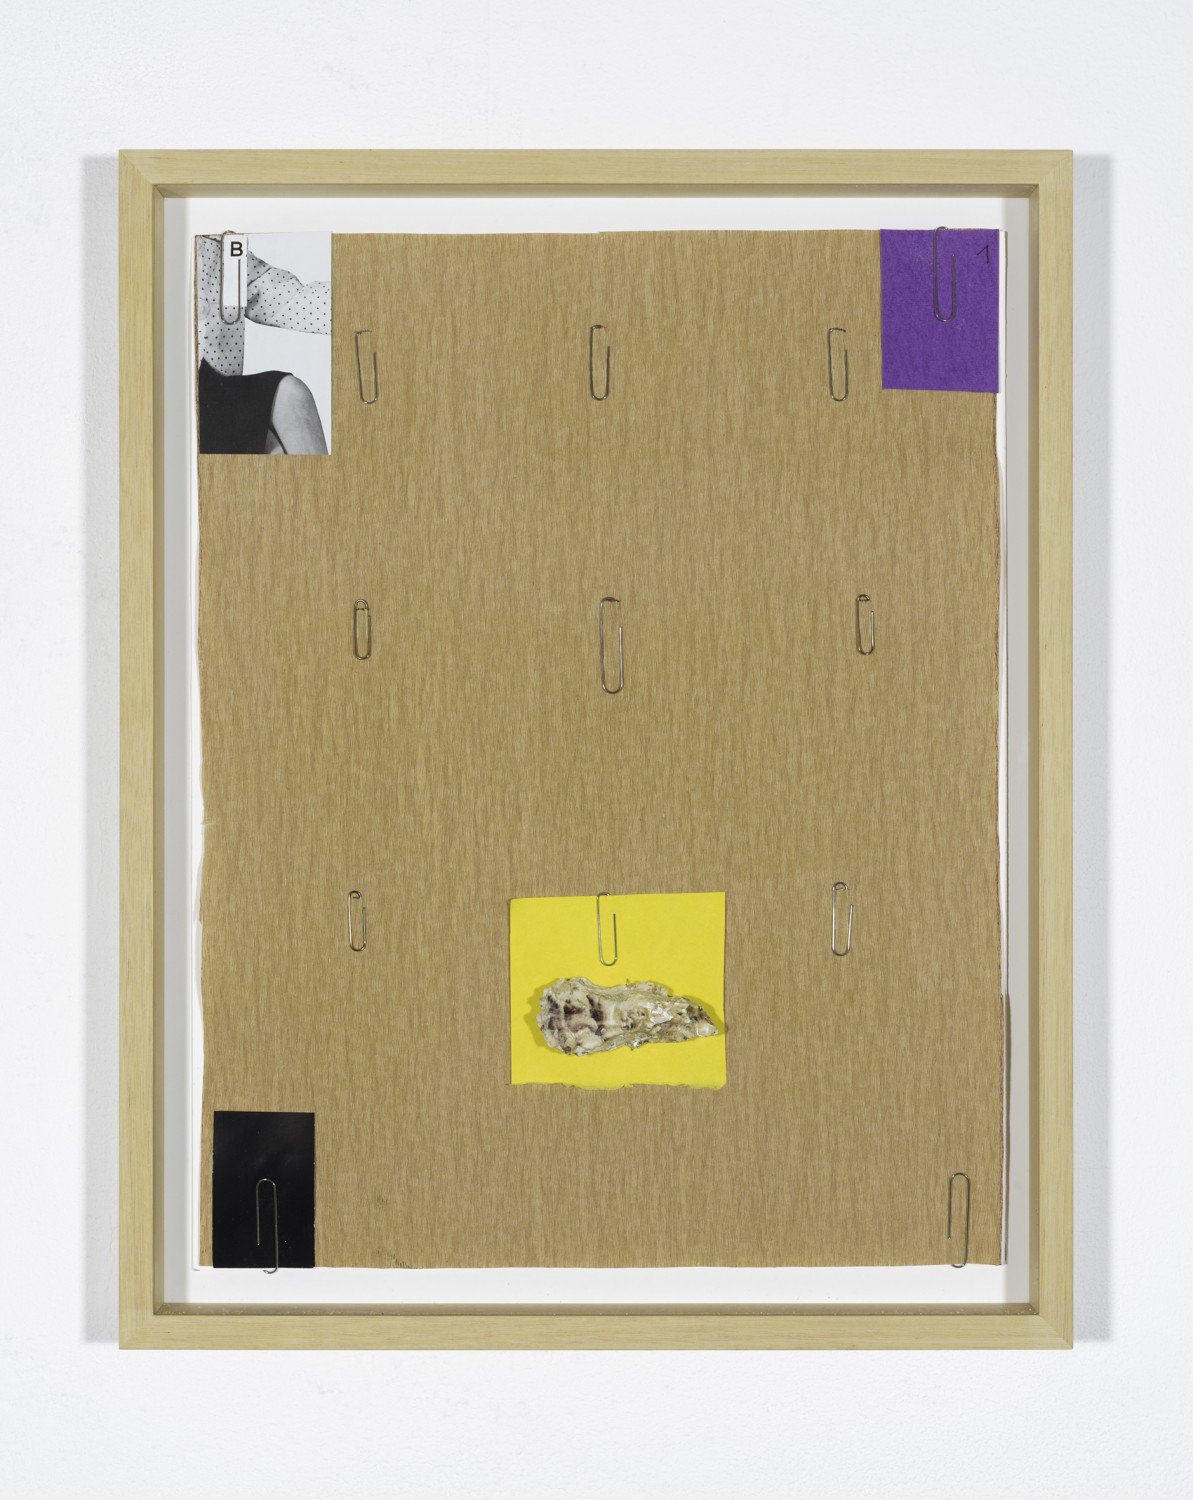 Franz AmannLa Concha Balenciaga (Re-arranged by J.Hubert) 1, 2015Collage50 x 45 x 4 cm